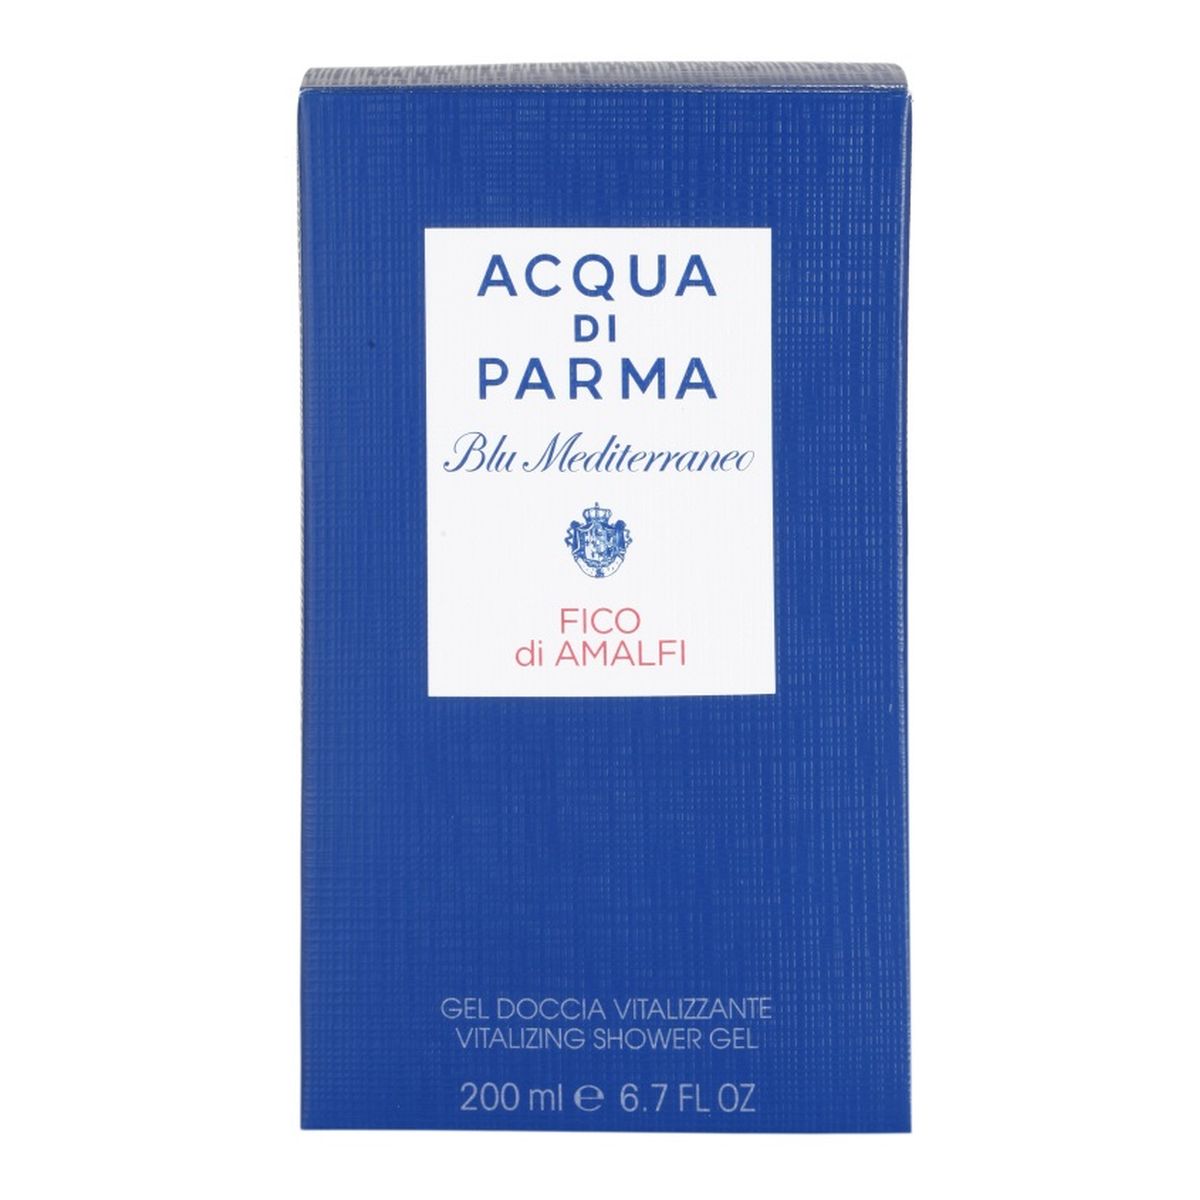 Acqua Di Parma Blu Mediterraneo Fico di Amalfi żel pod prysznic dla kobiet 200ml